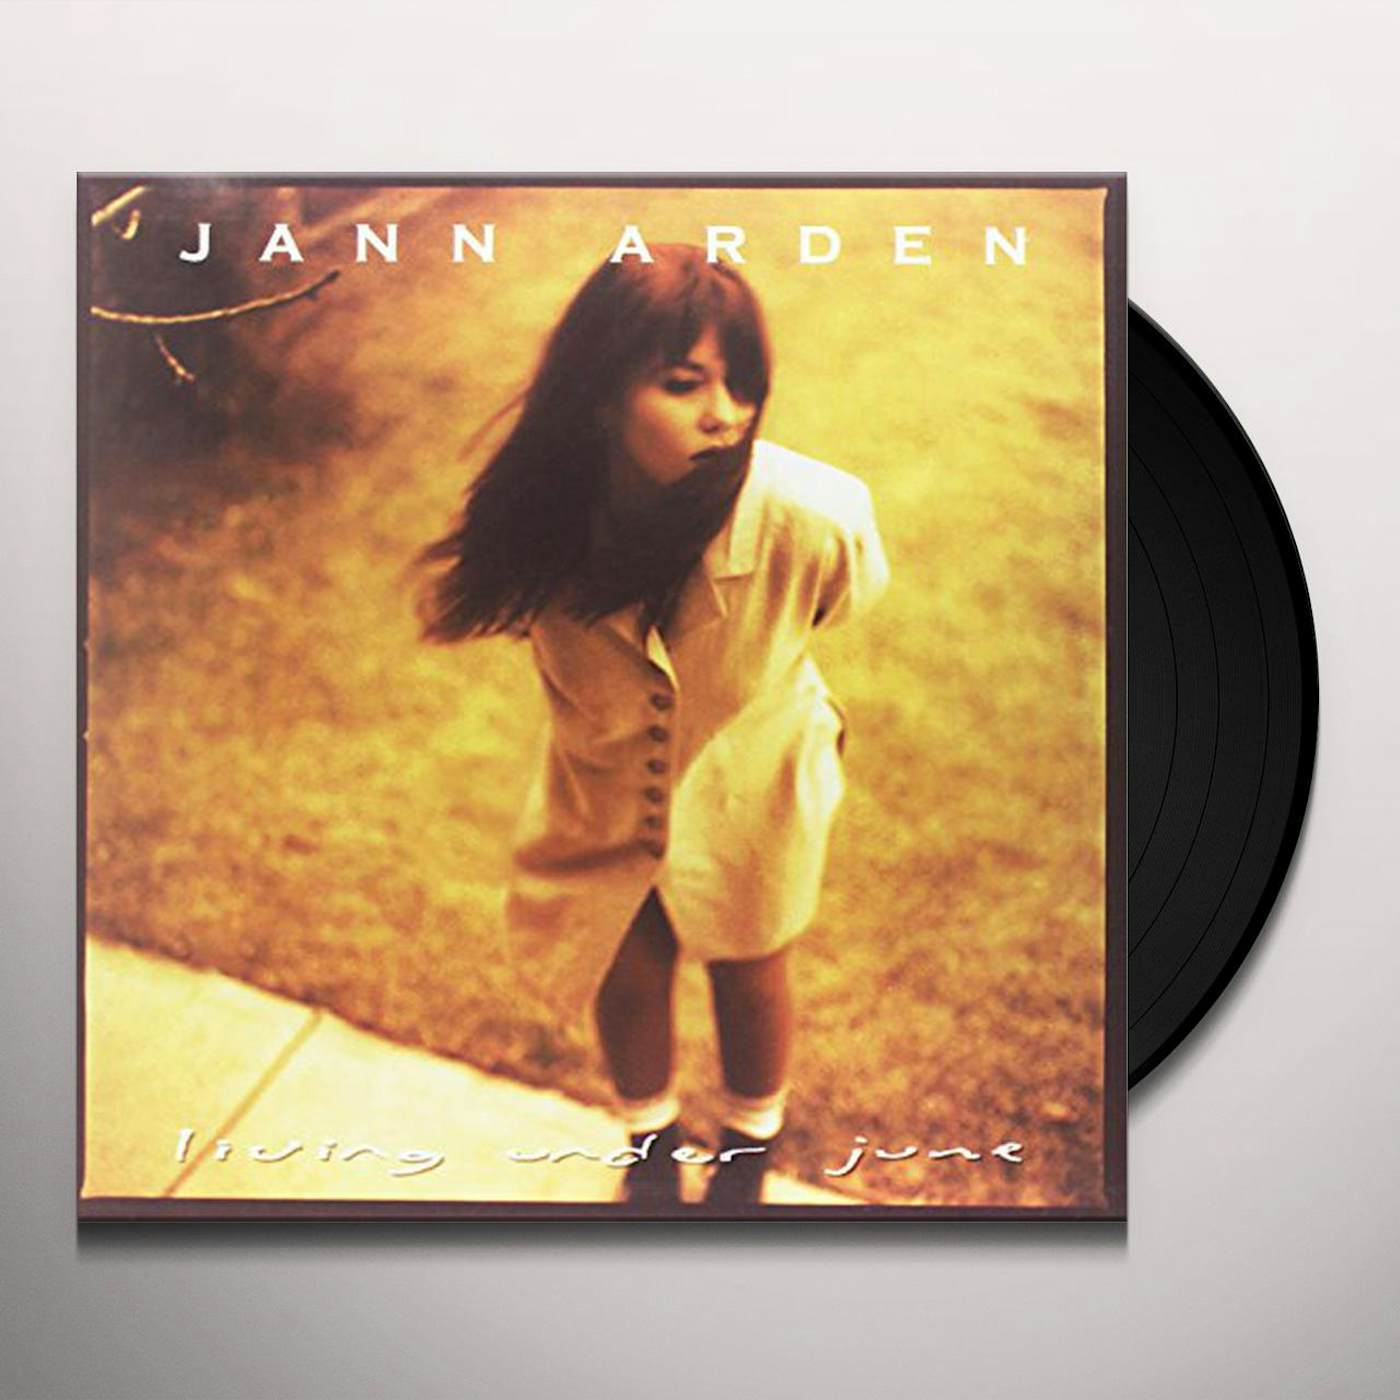 Jann Arden Living Under June Vinyl Record